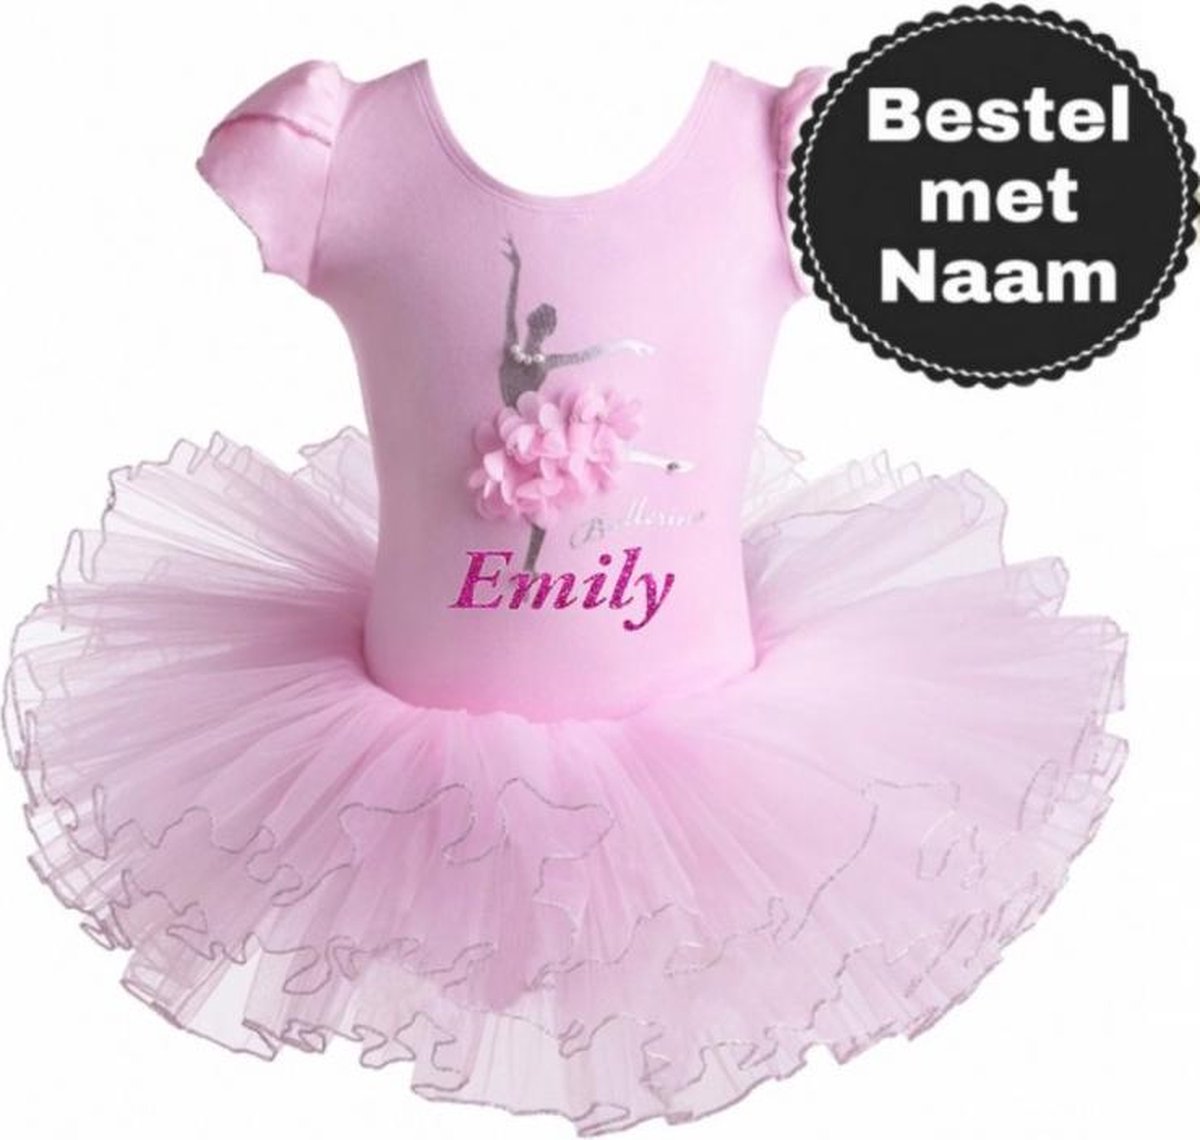 Balletpakje Ballerina + Eigen naam + Tutu - roze - Ballet - maat 104-110 prinsessen tutu verkleed jurk meisje